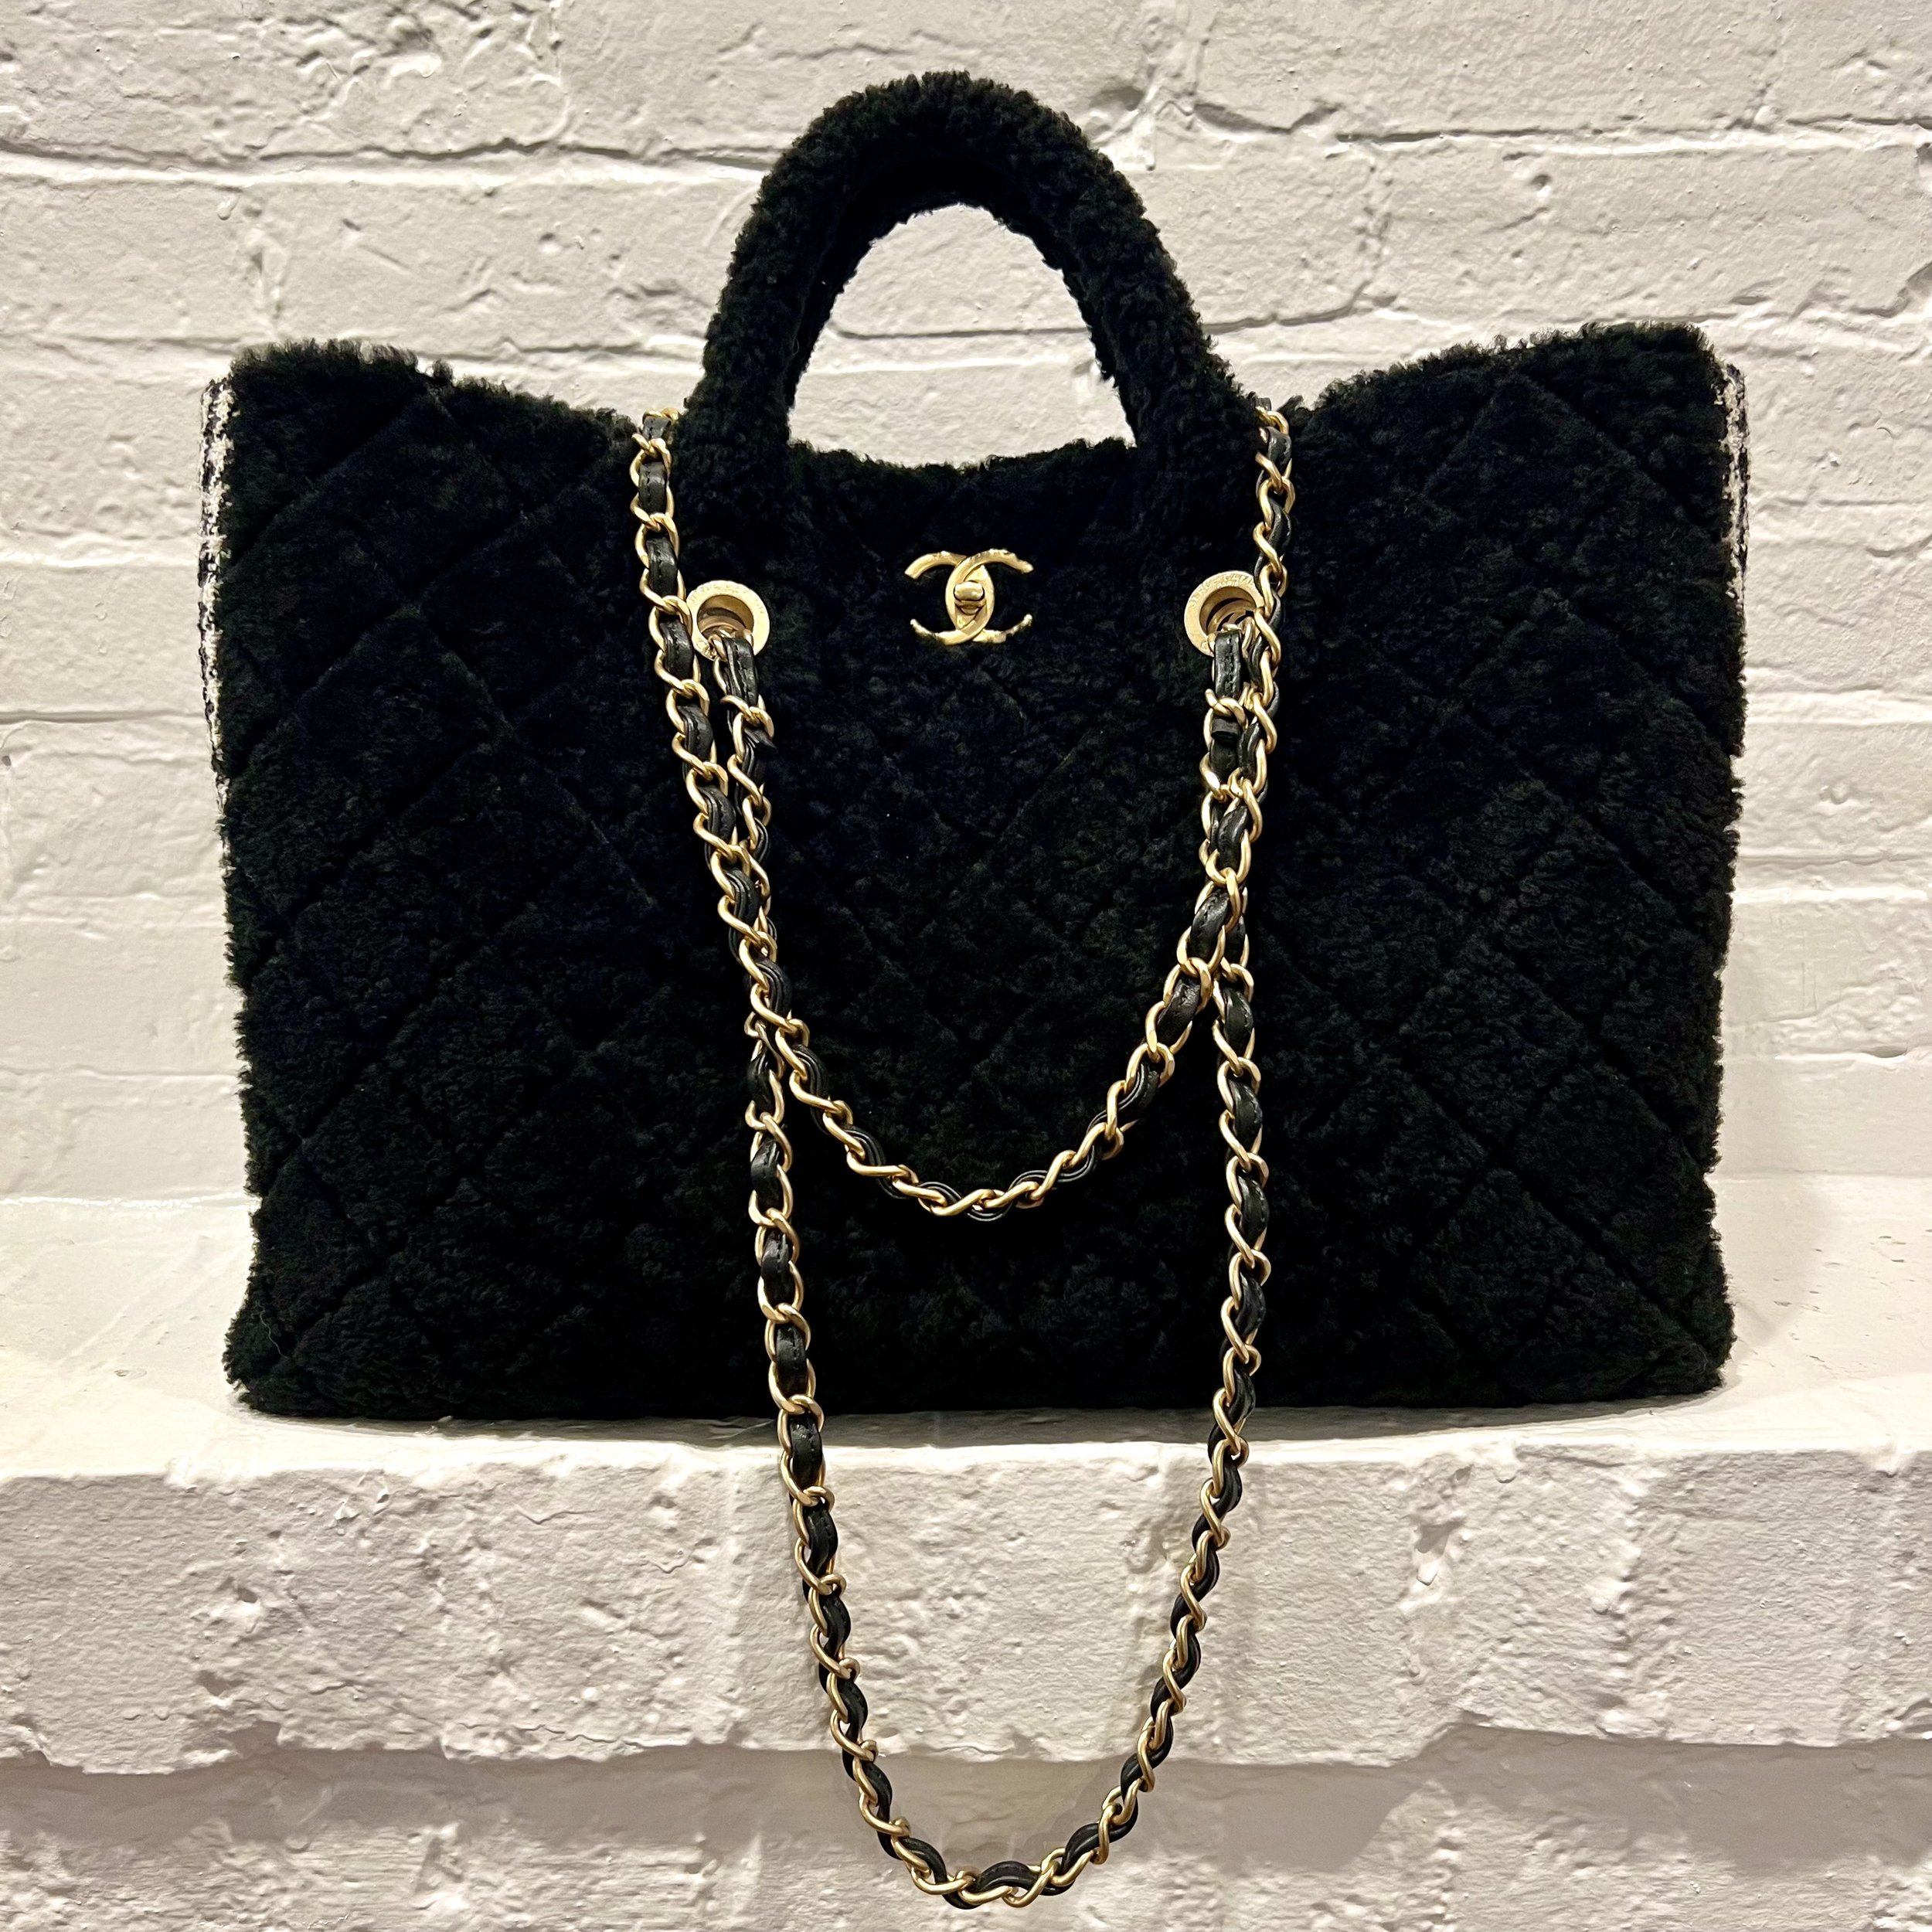 Chanel Heart Bag Large, Pink Lambskin Leather, Gold Hardware, Like New in  Box GA001 - Julia Rose Boston